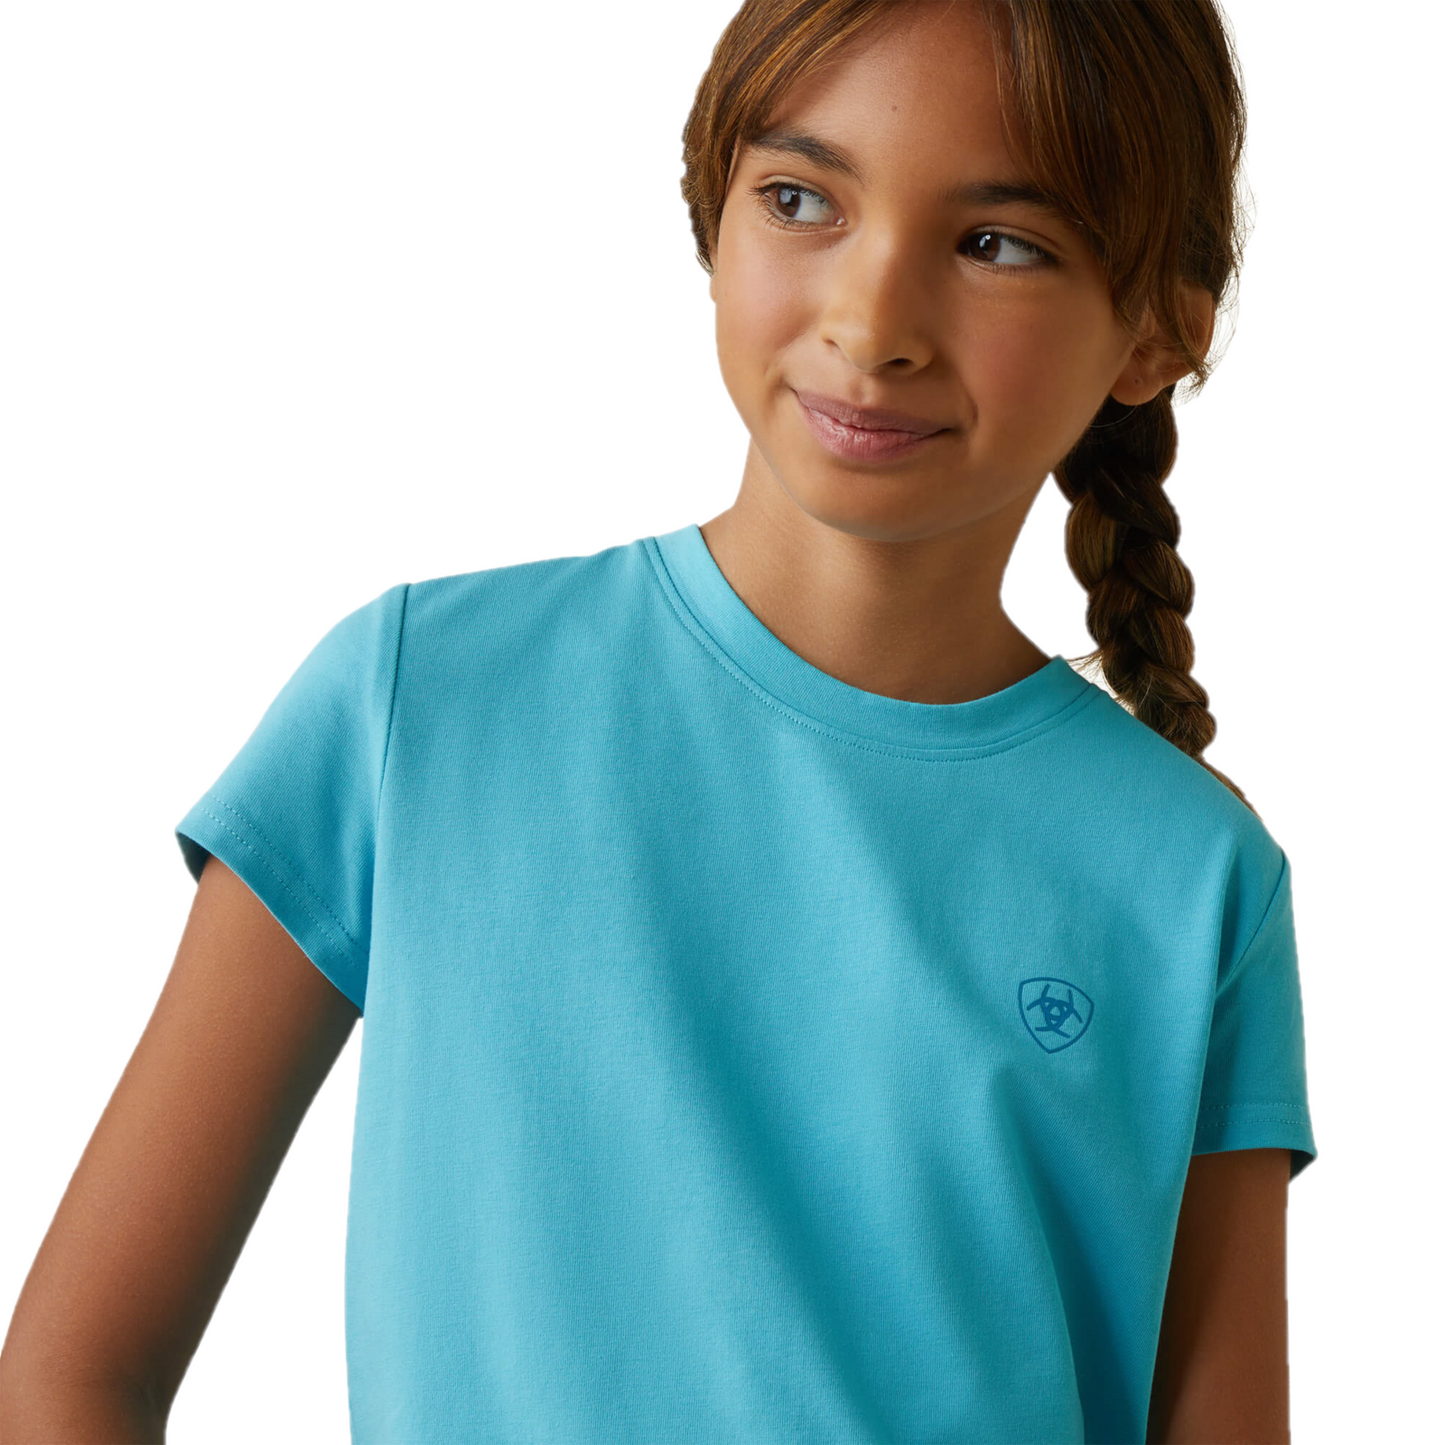 Ariat® Girls Varsity Camo Maui Blue T-Shirt 10043735